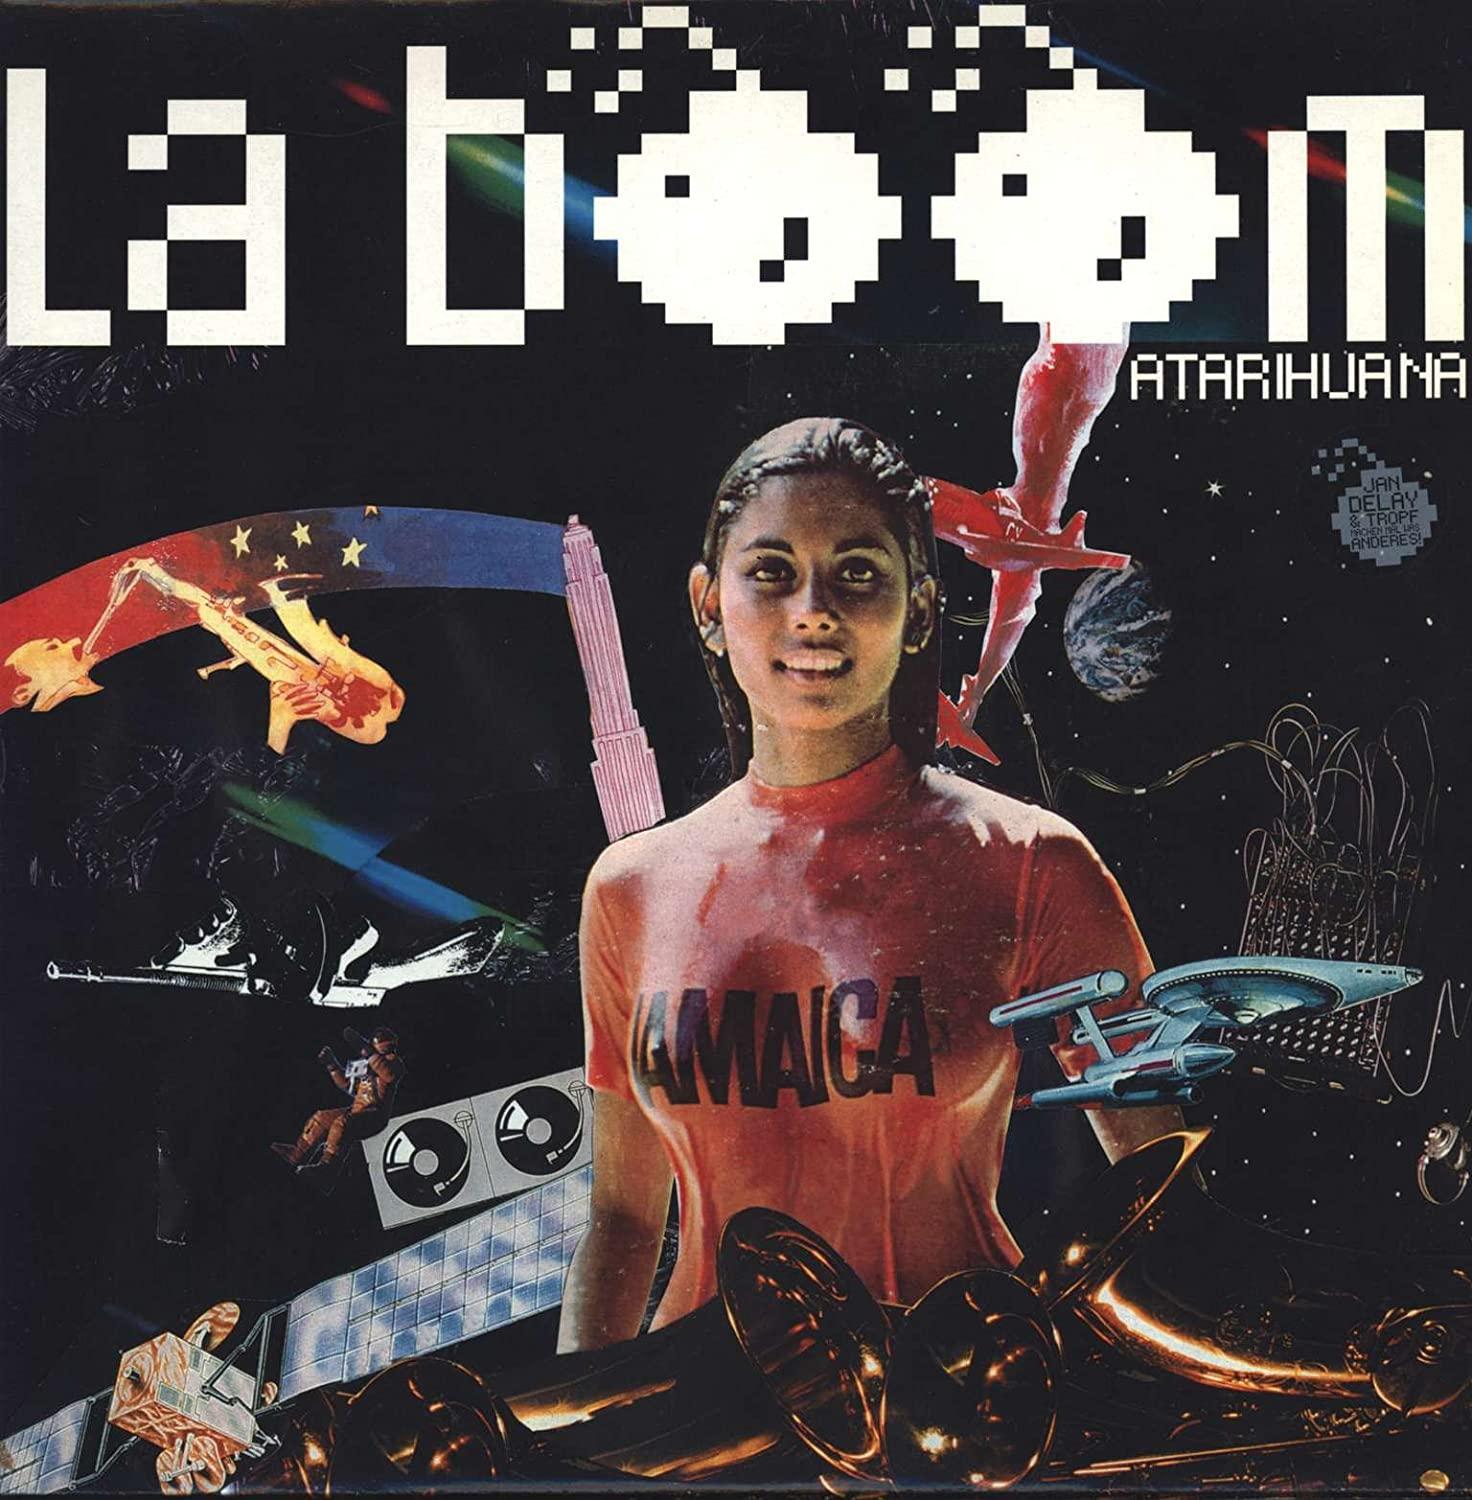 La Boom - Atarihuana JAN DELAY